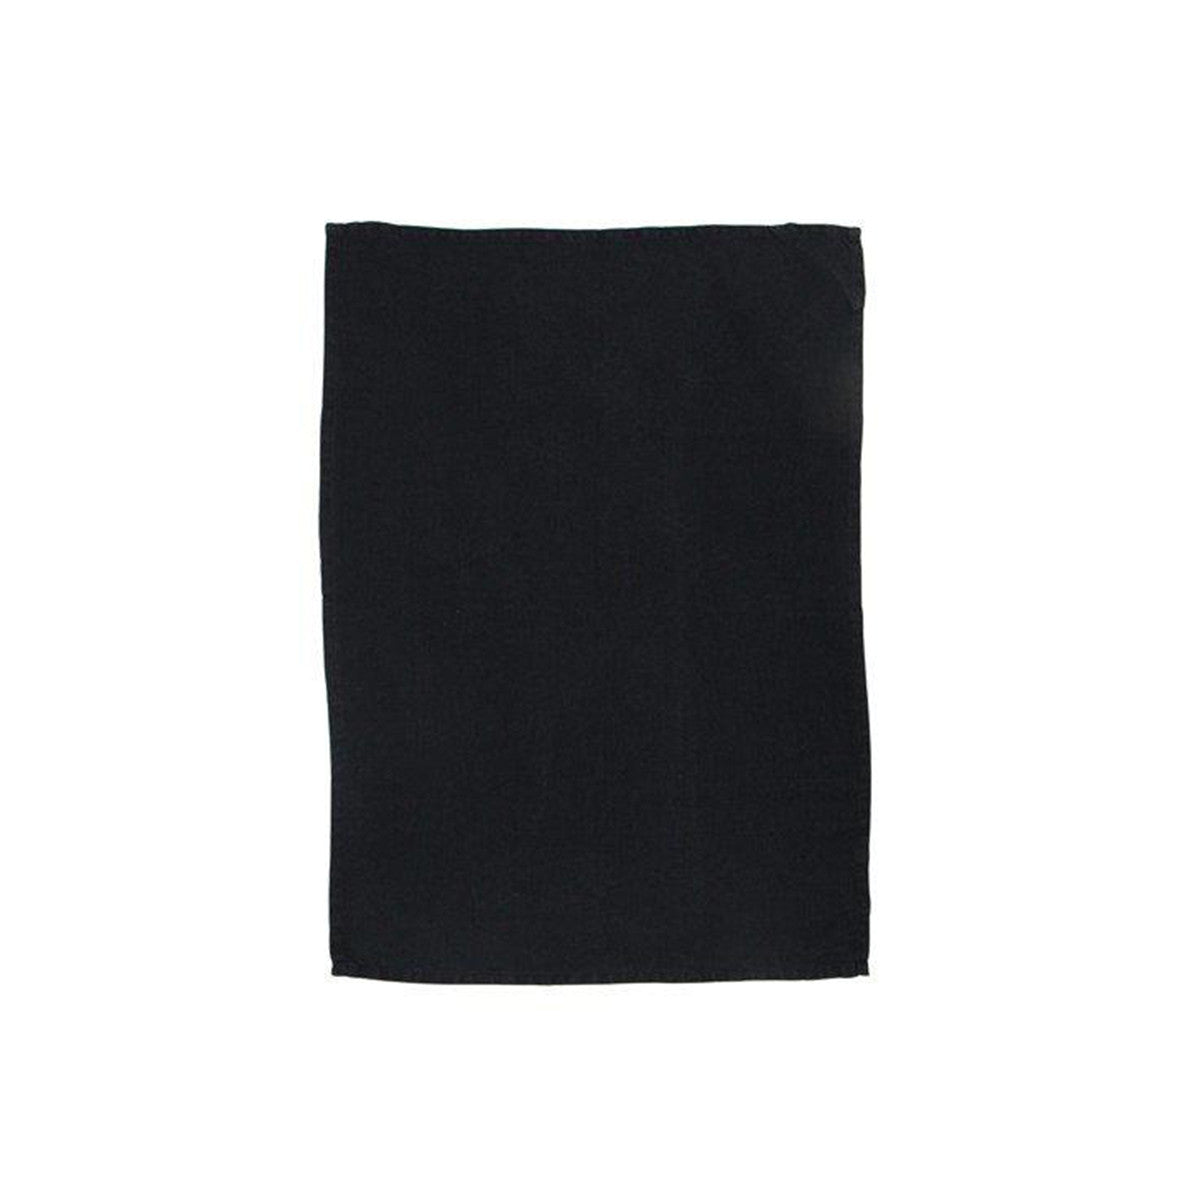 OESD Tea Towels, 2 Count, Black